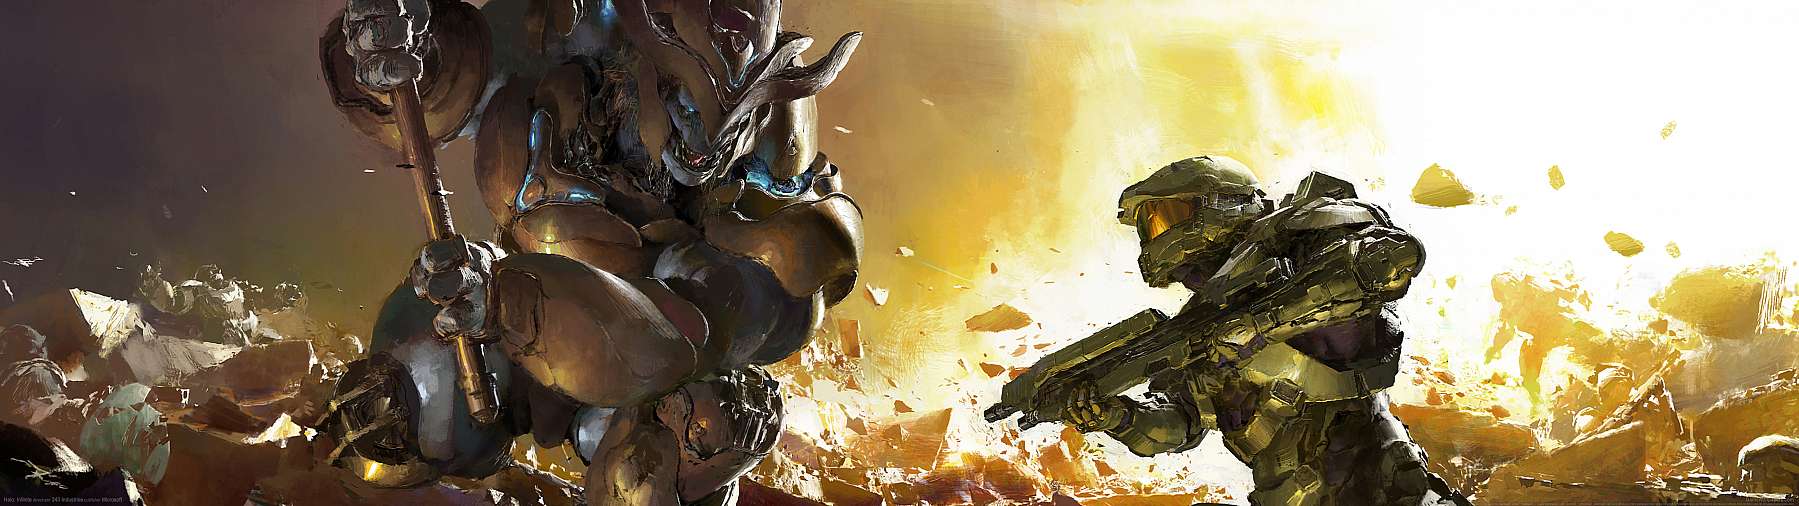 Halo: Infinite superwide achtergrond 26